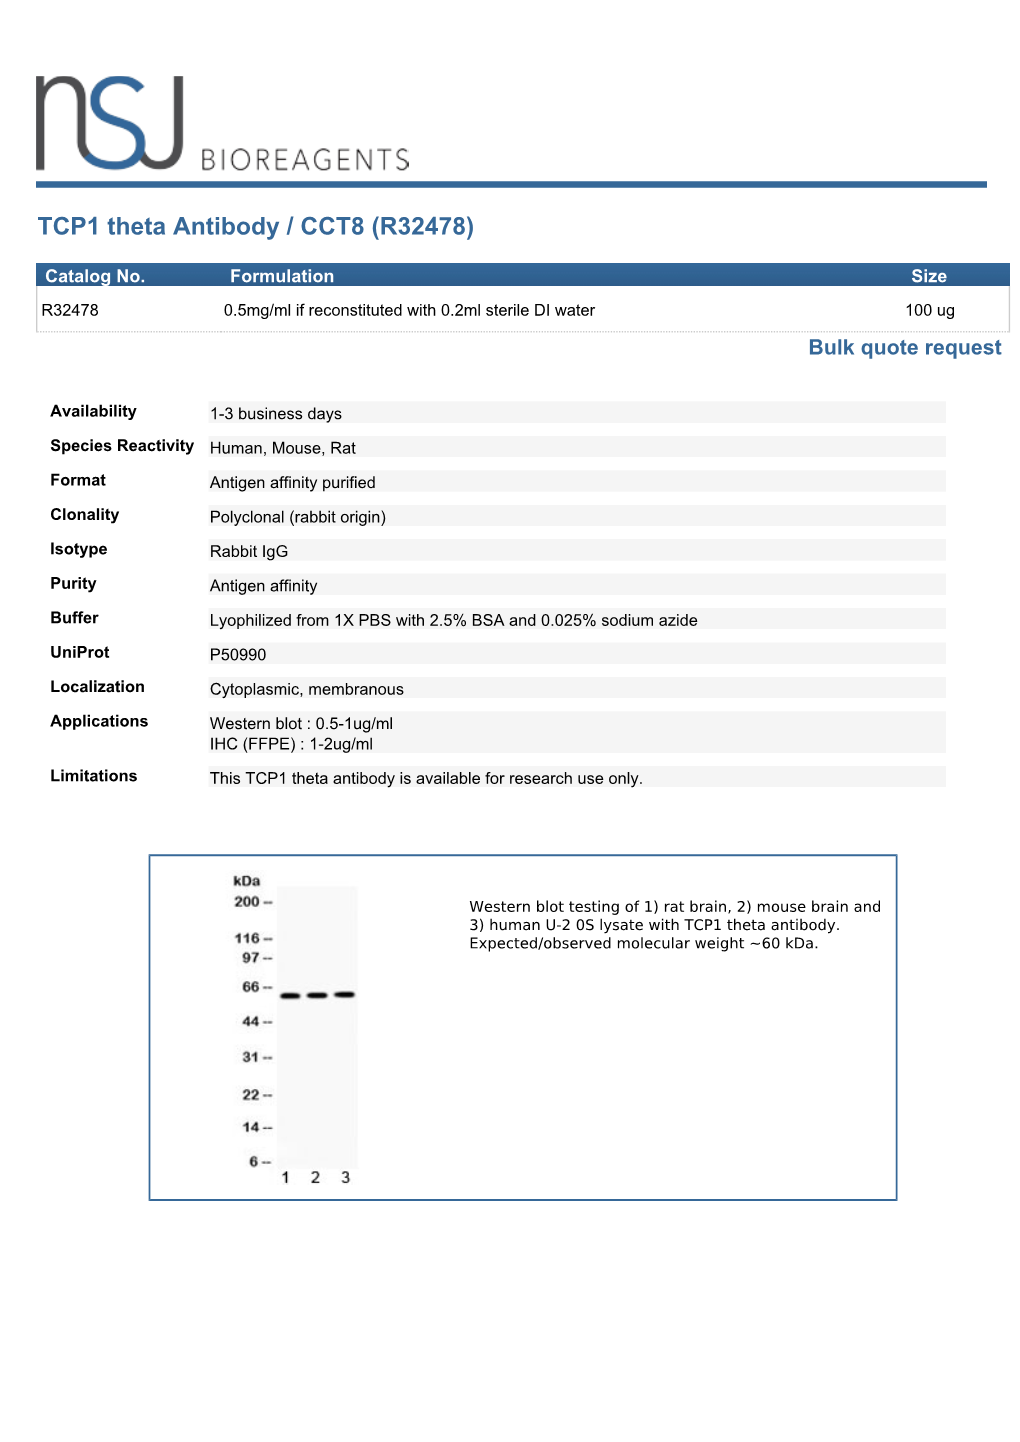 TCP1 Theta Antibody / CCT8 (R32478)